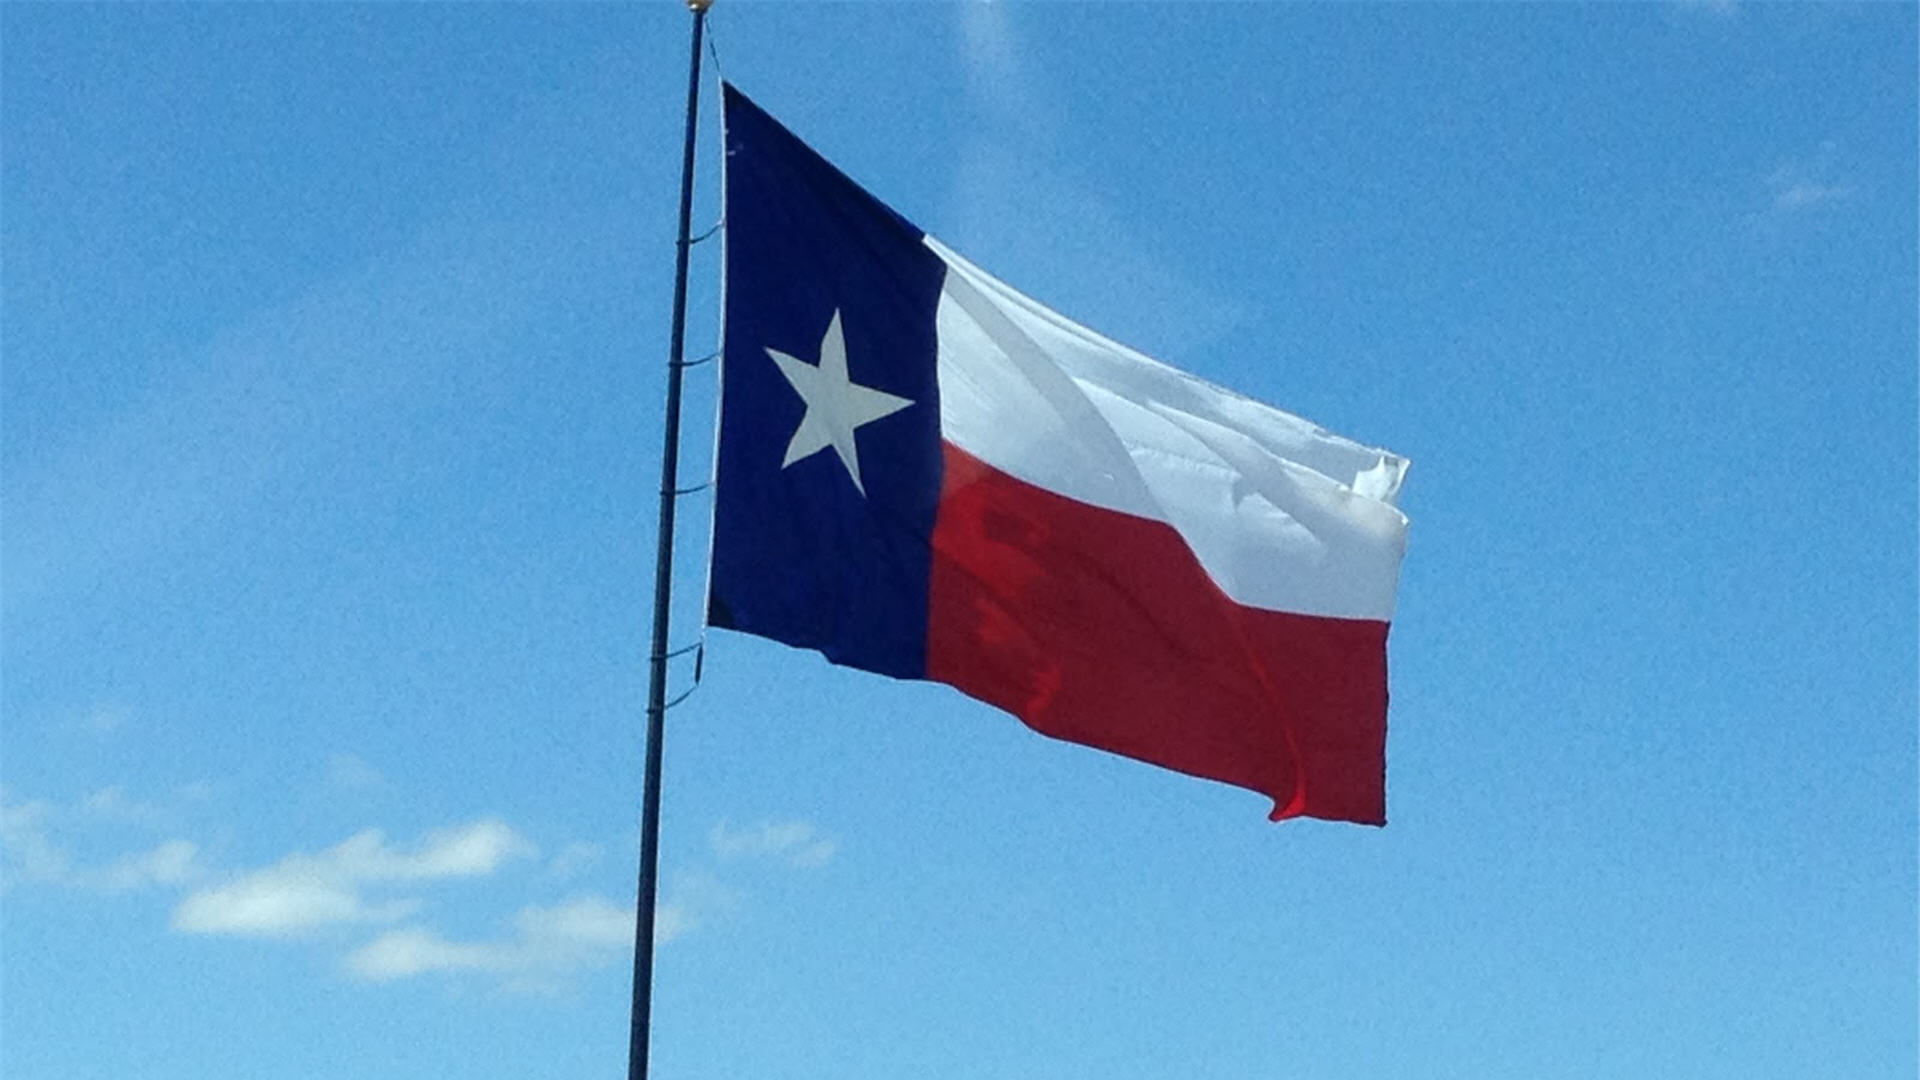 Texas Flag Wallpapers